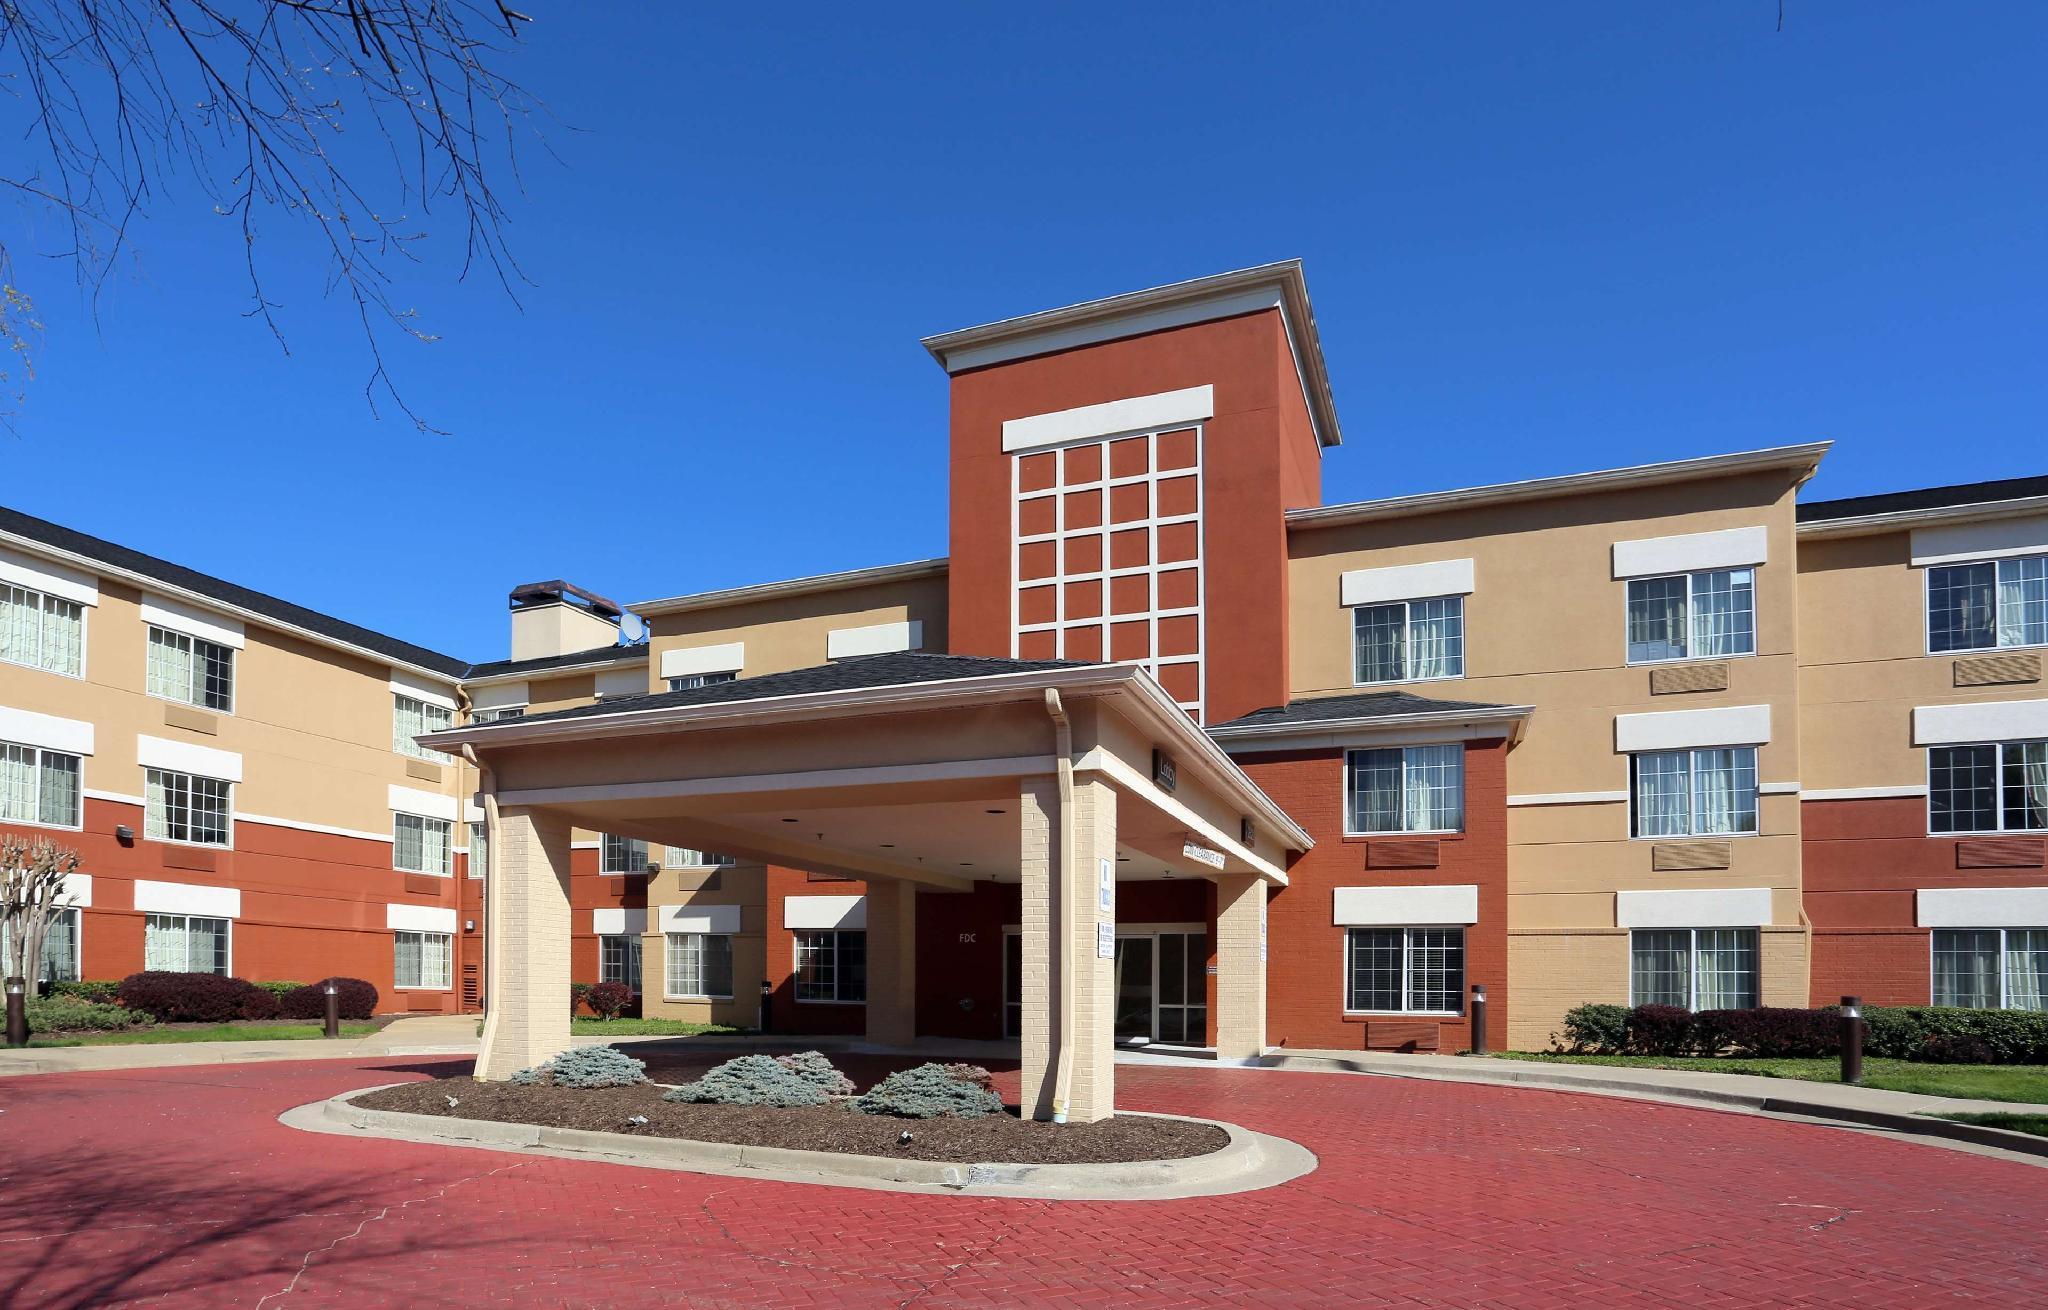 Extended Stay America Suites - Washington, D.c. - Rockville - Rockville, MD